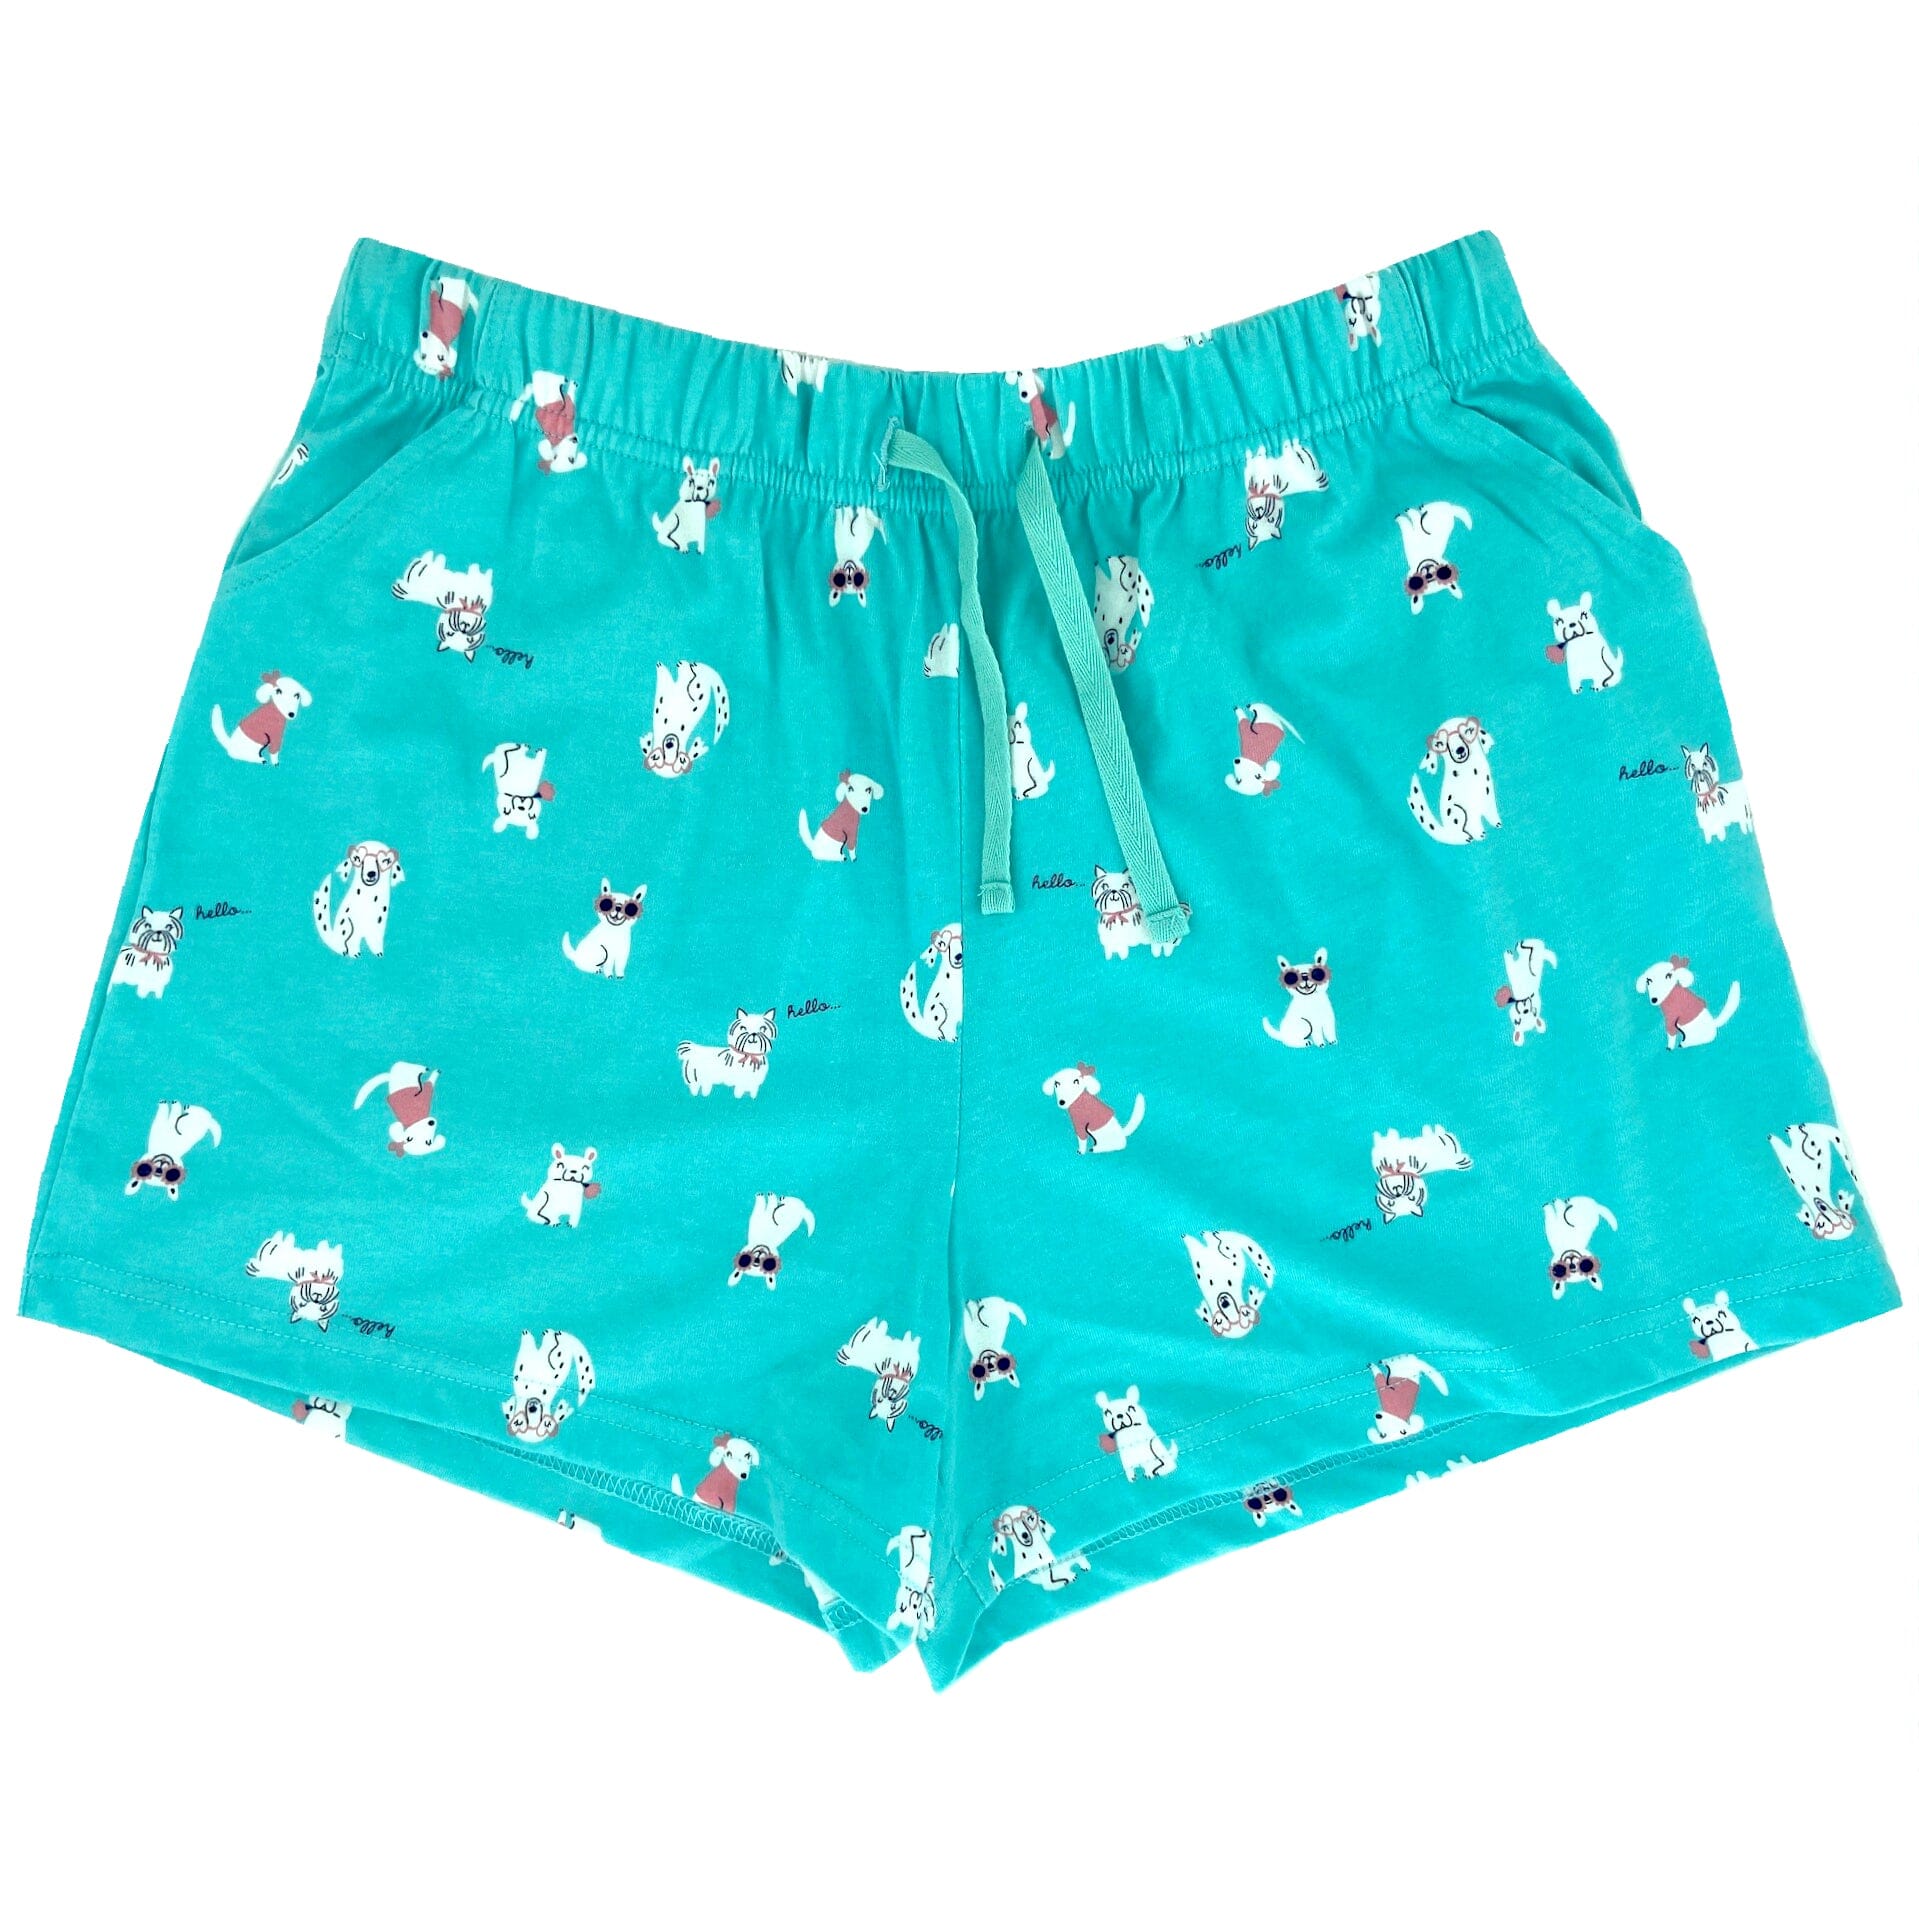 Women's Pet Lovers Dog Patterned Cotton Jersey Knit Pajama Bottoms